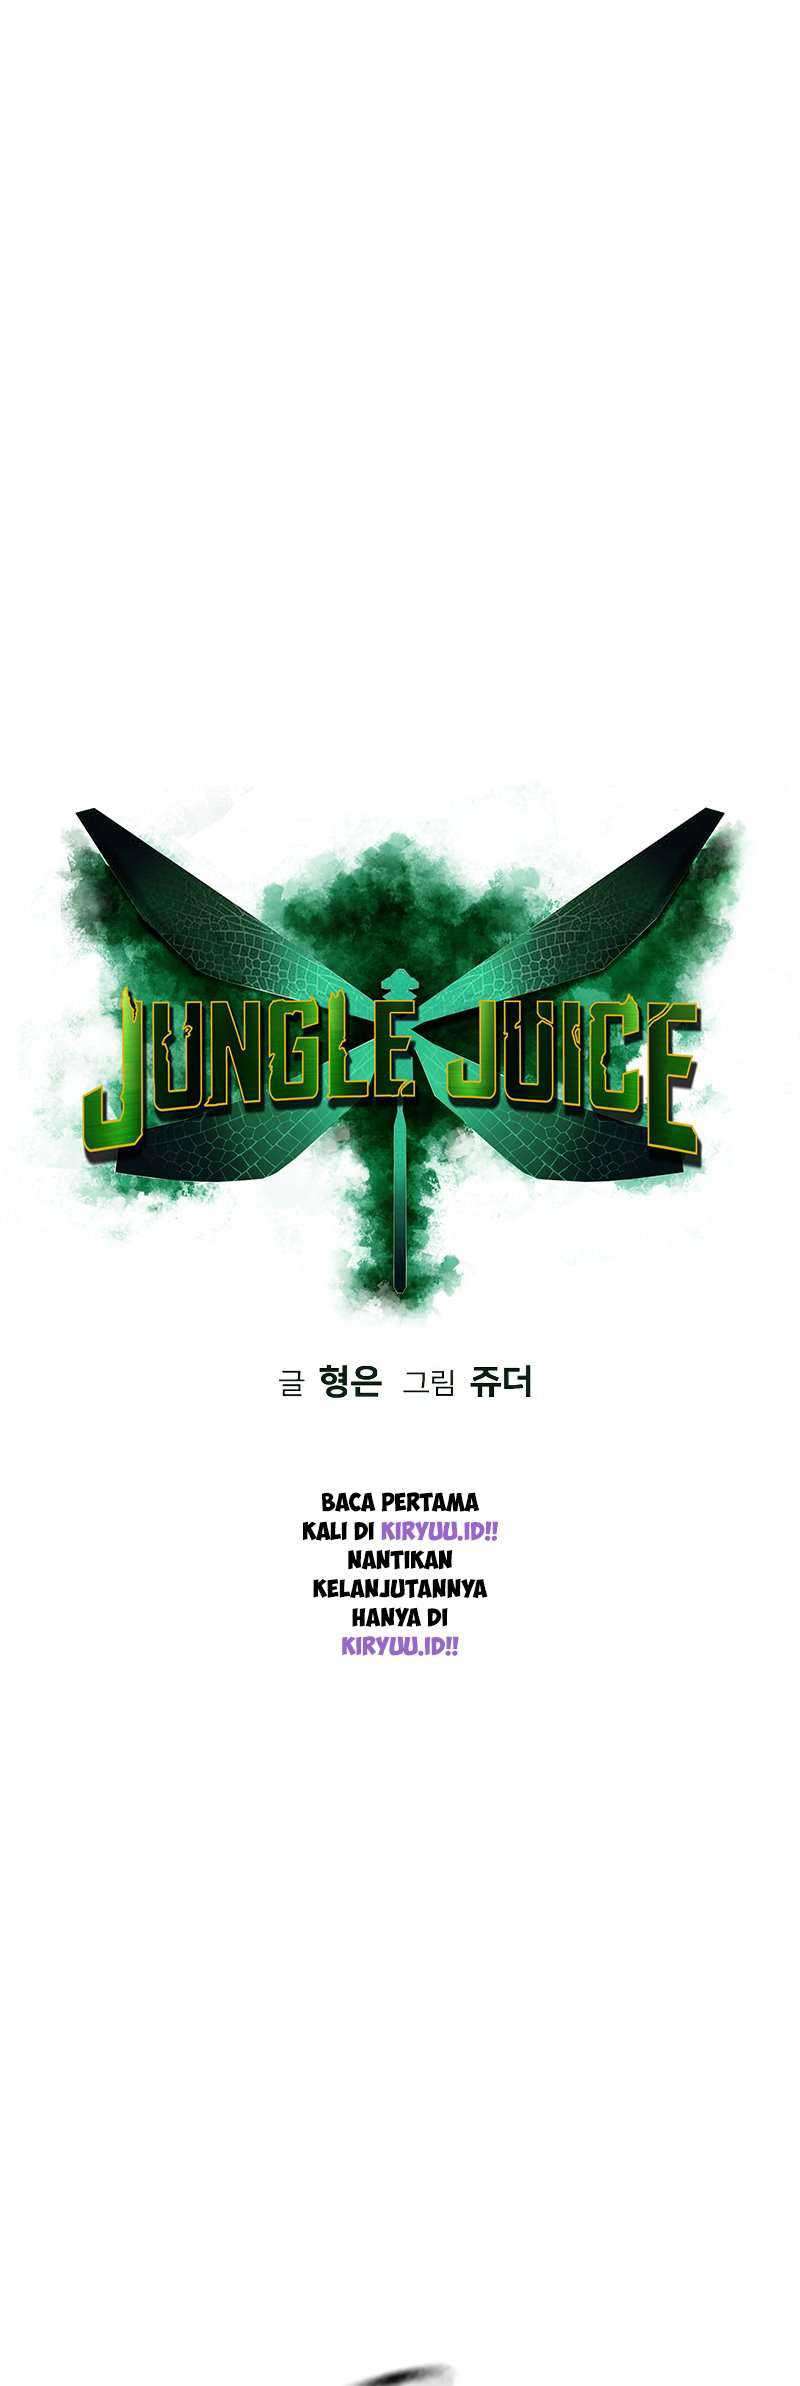 Jungle Juice Chapter 31